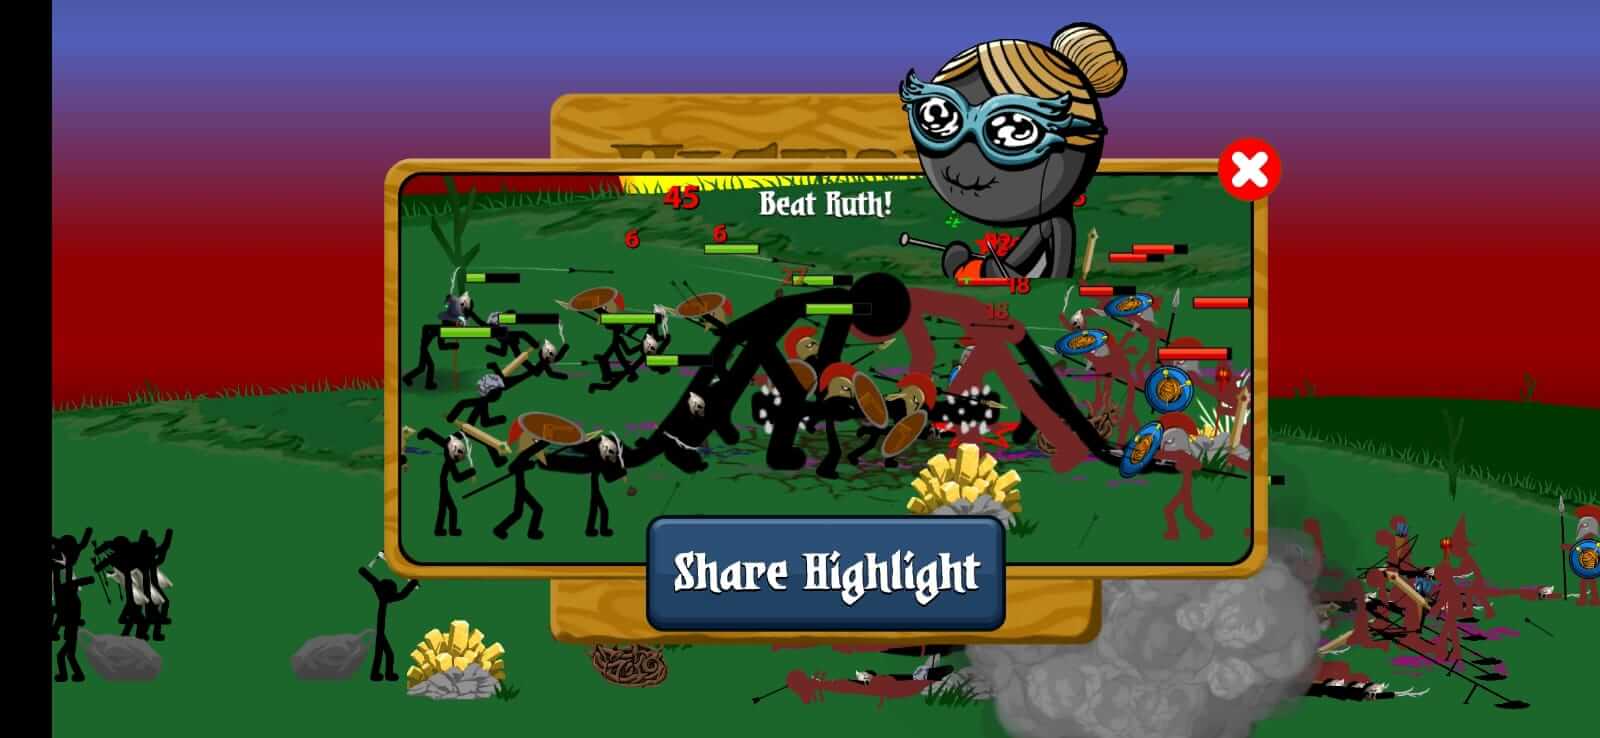 Stick War: Legacy-Screenshot